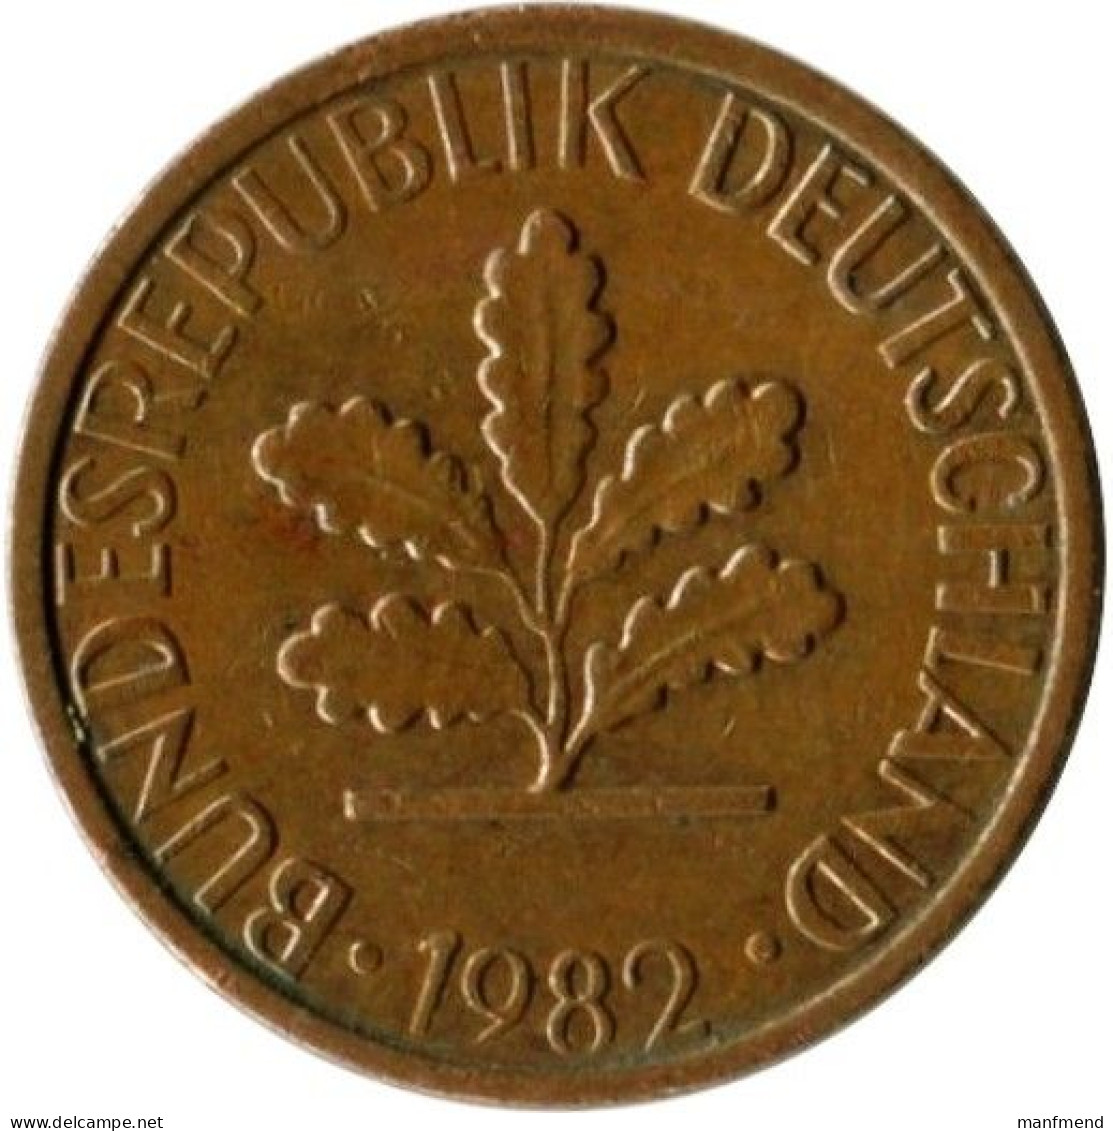 Germany - 1982 - KM 105 - 1 Pfennig - Mintmark "J" / Hamburg - VF+ - Look Scans - 1 Pfennig